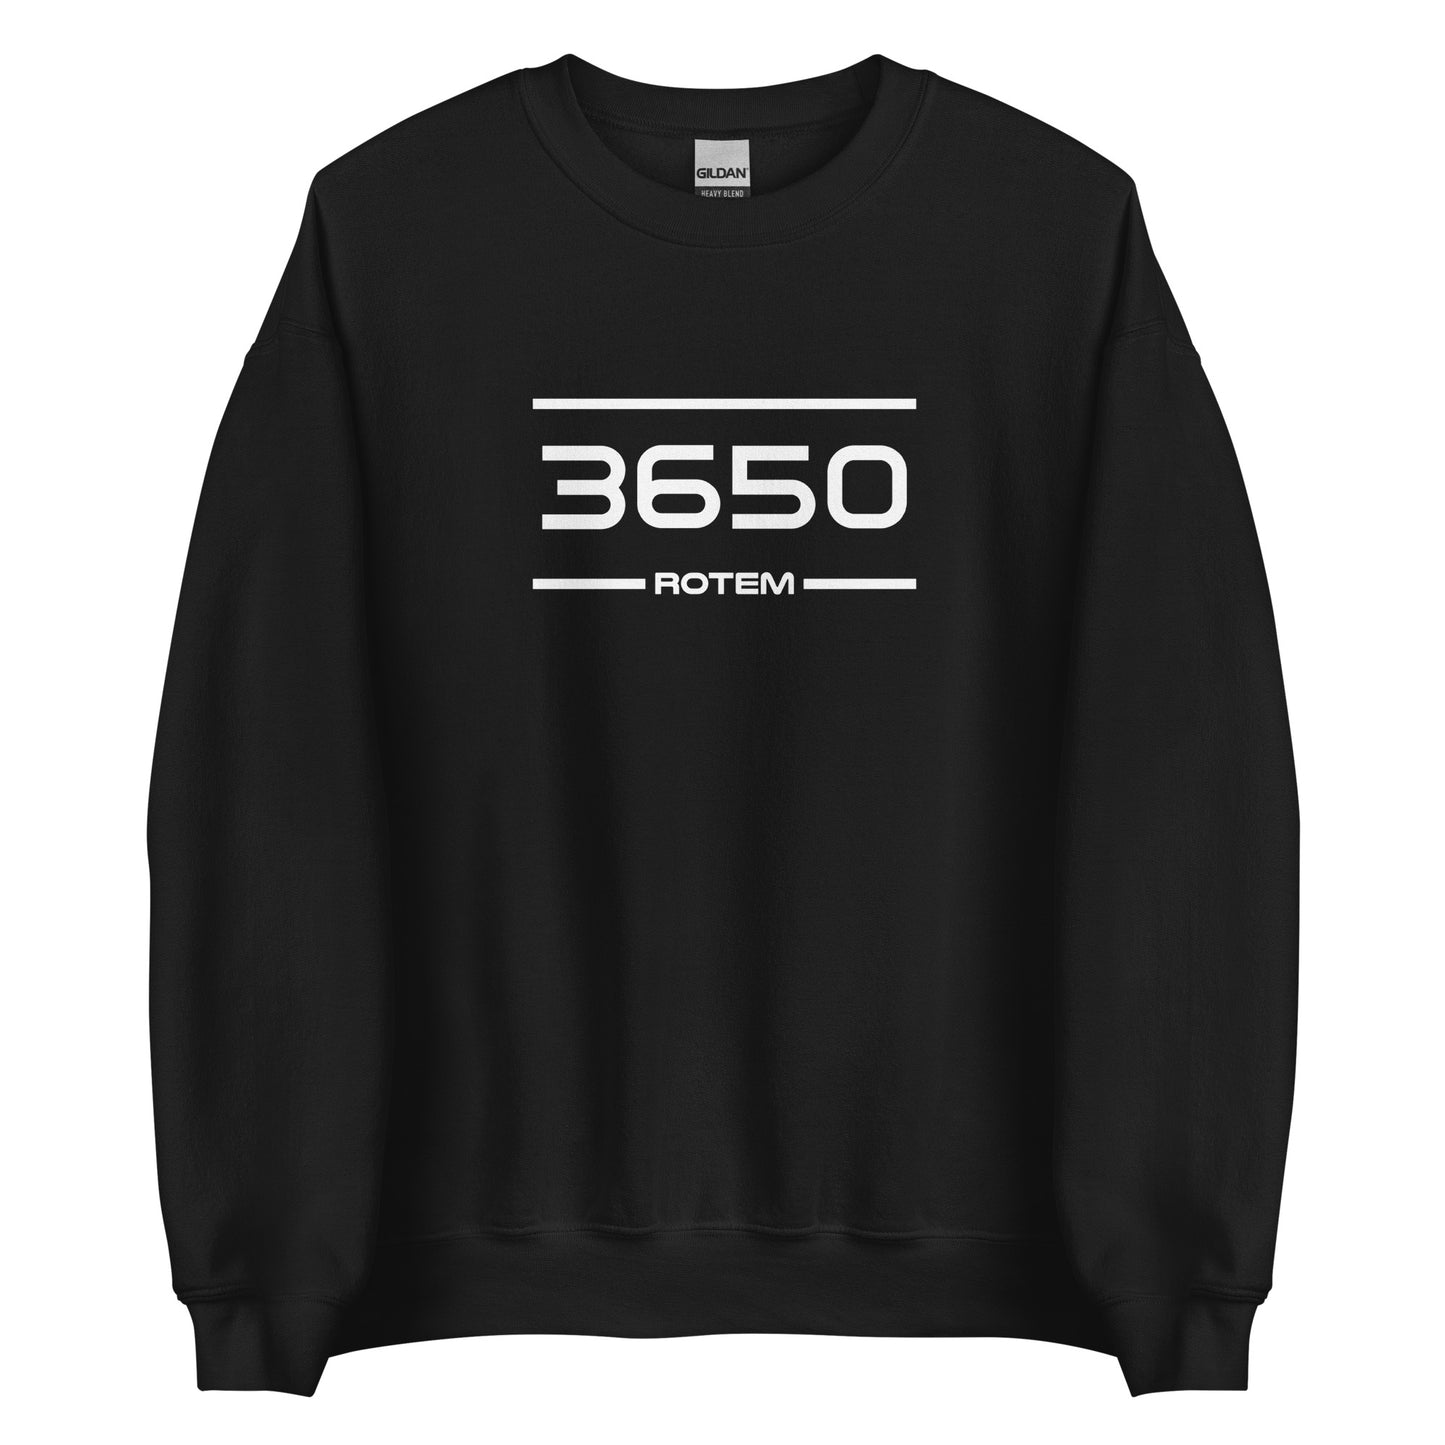 Sweater - 3650 - Rotem (M/V)